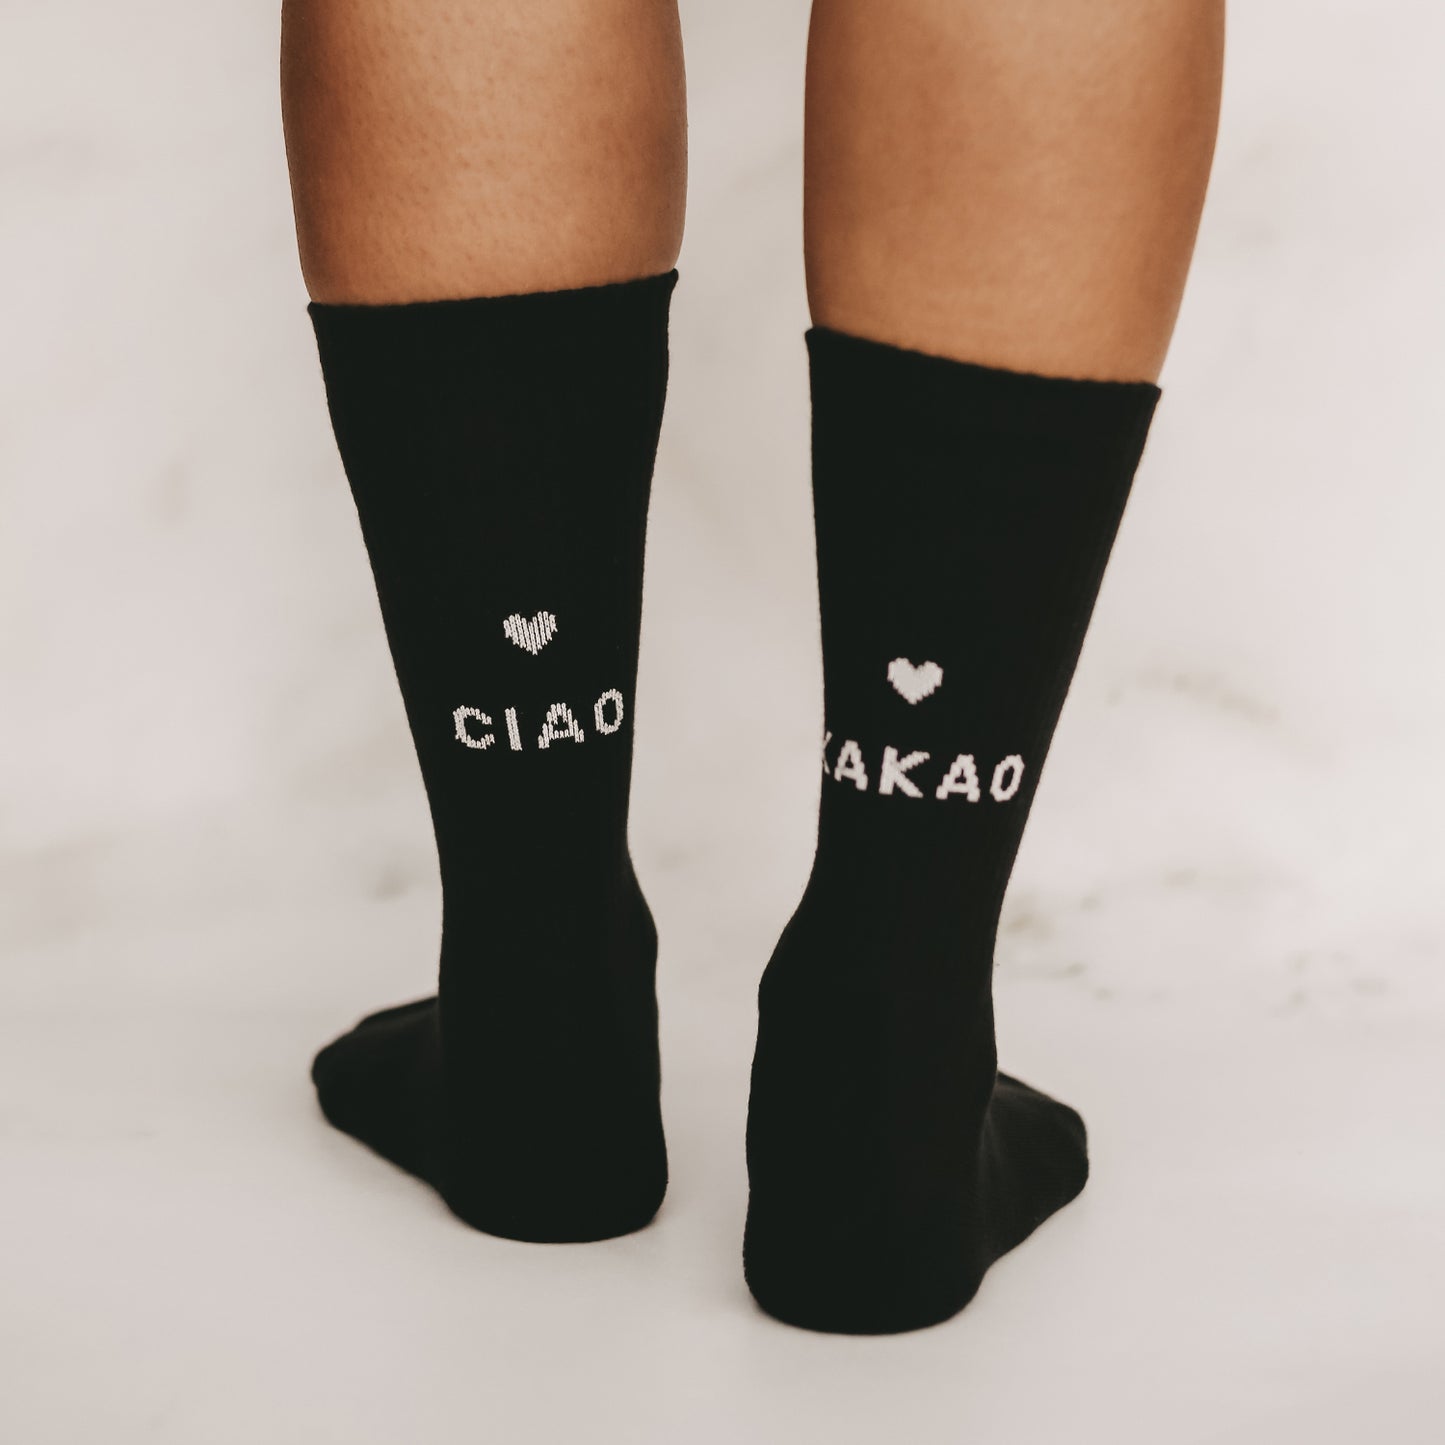 Socken Ciao Kakao schwarz